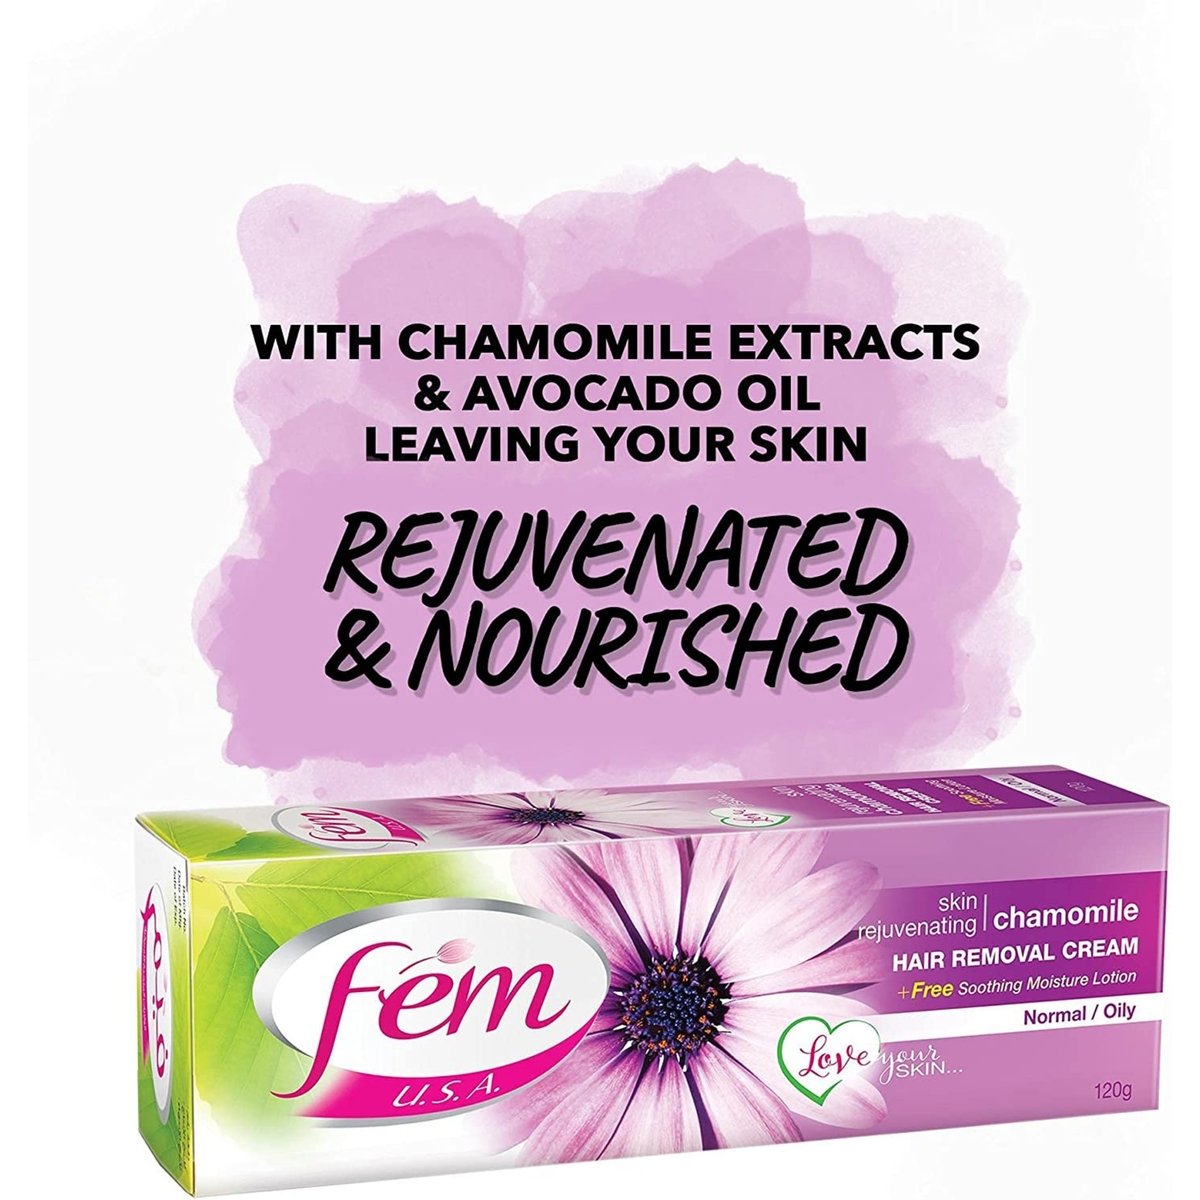 Fem USA Hair Removal Cream with Rejuvenating Chamomile For Rejuvenating Skin 120 g